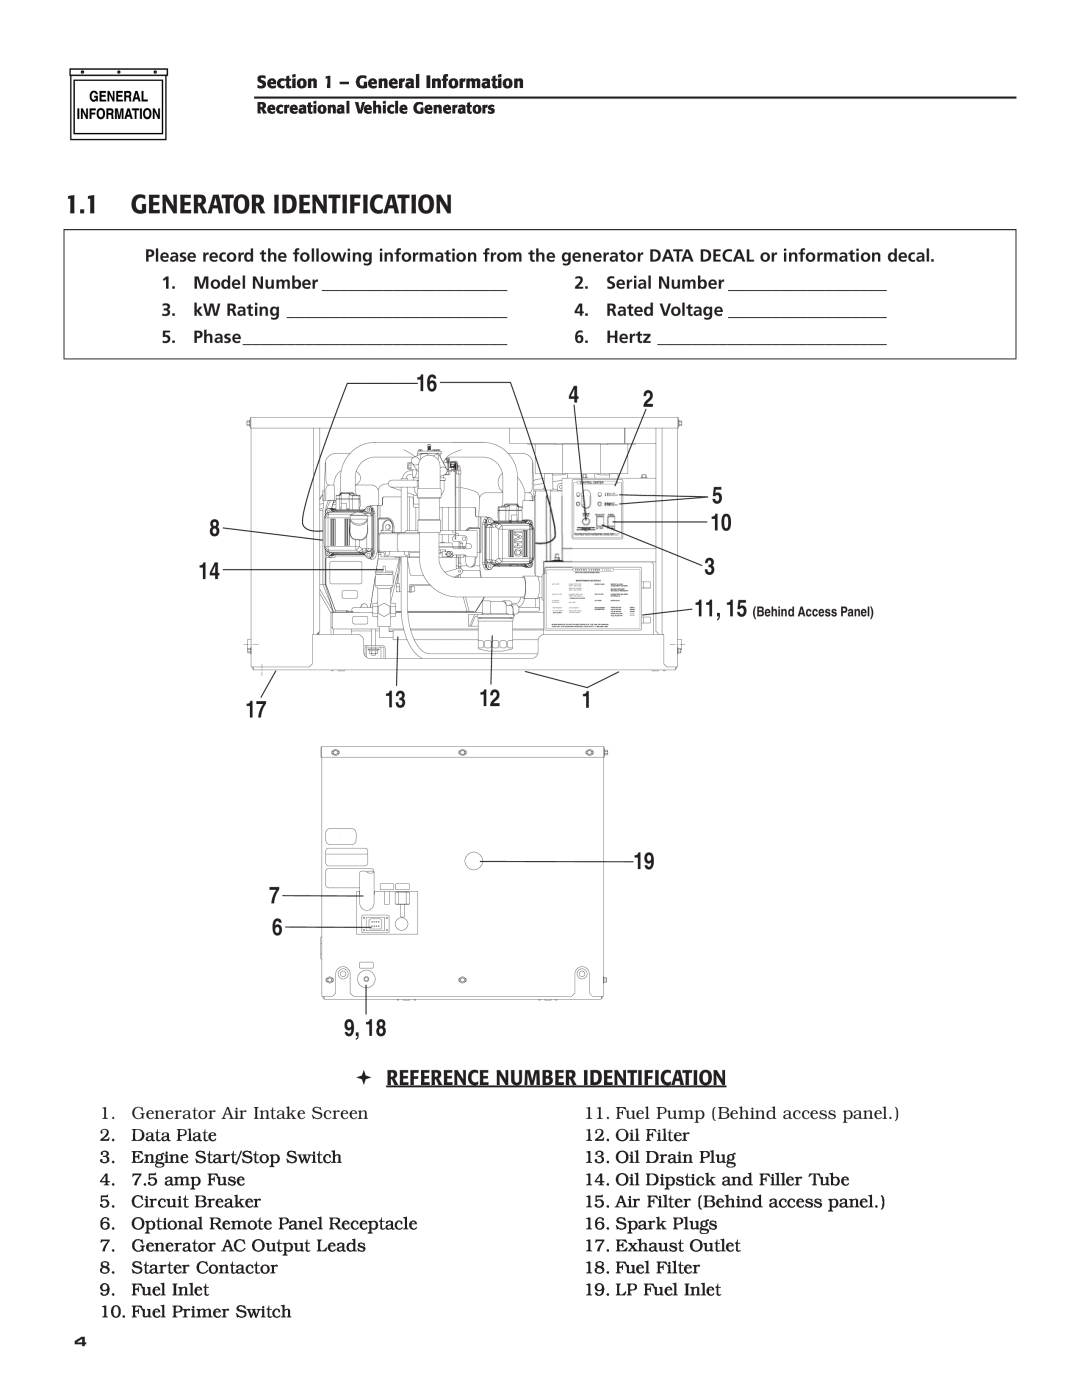 Guardian Technologies 004702-0, 004703-0, 004704-0, 004705-0, 004706-0, 004707-0 owner manual Generator Identification 